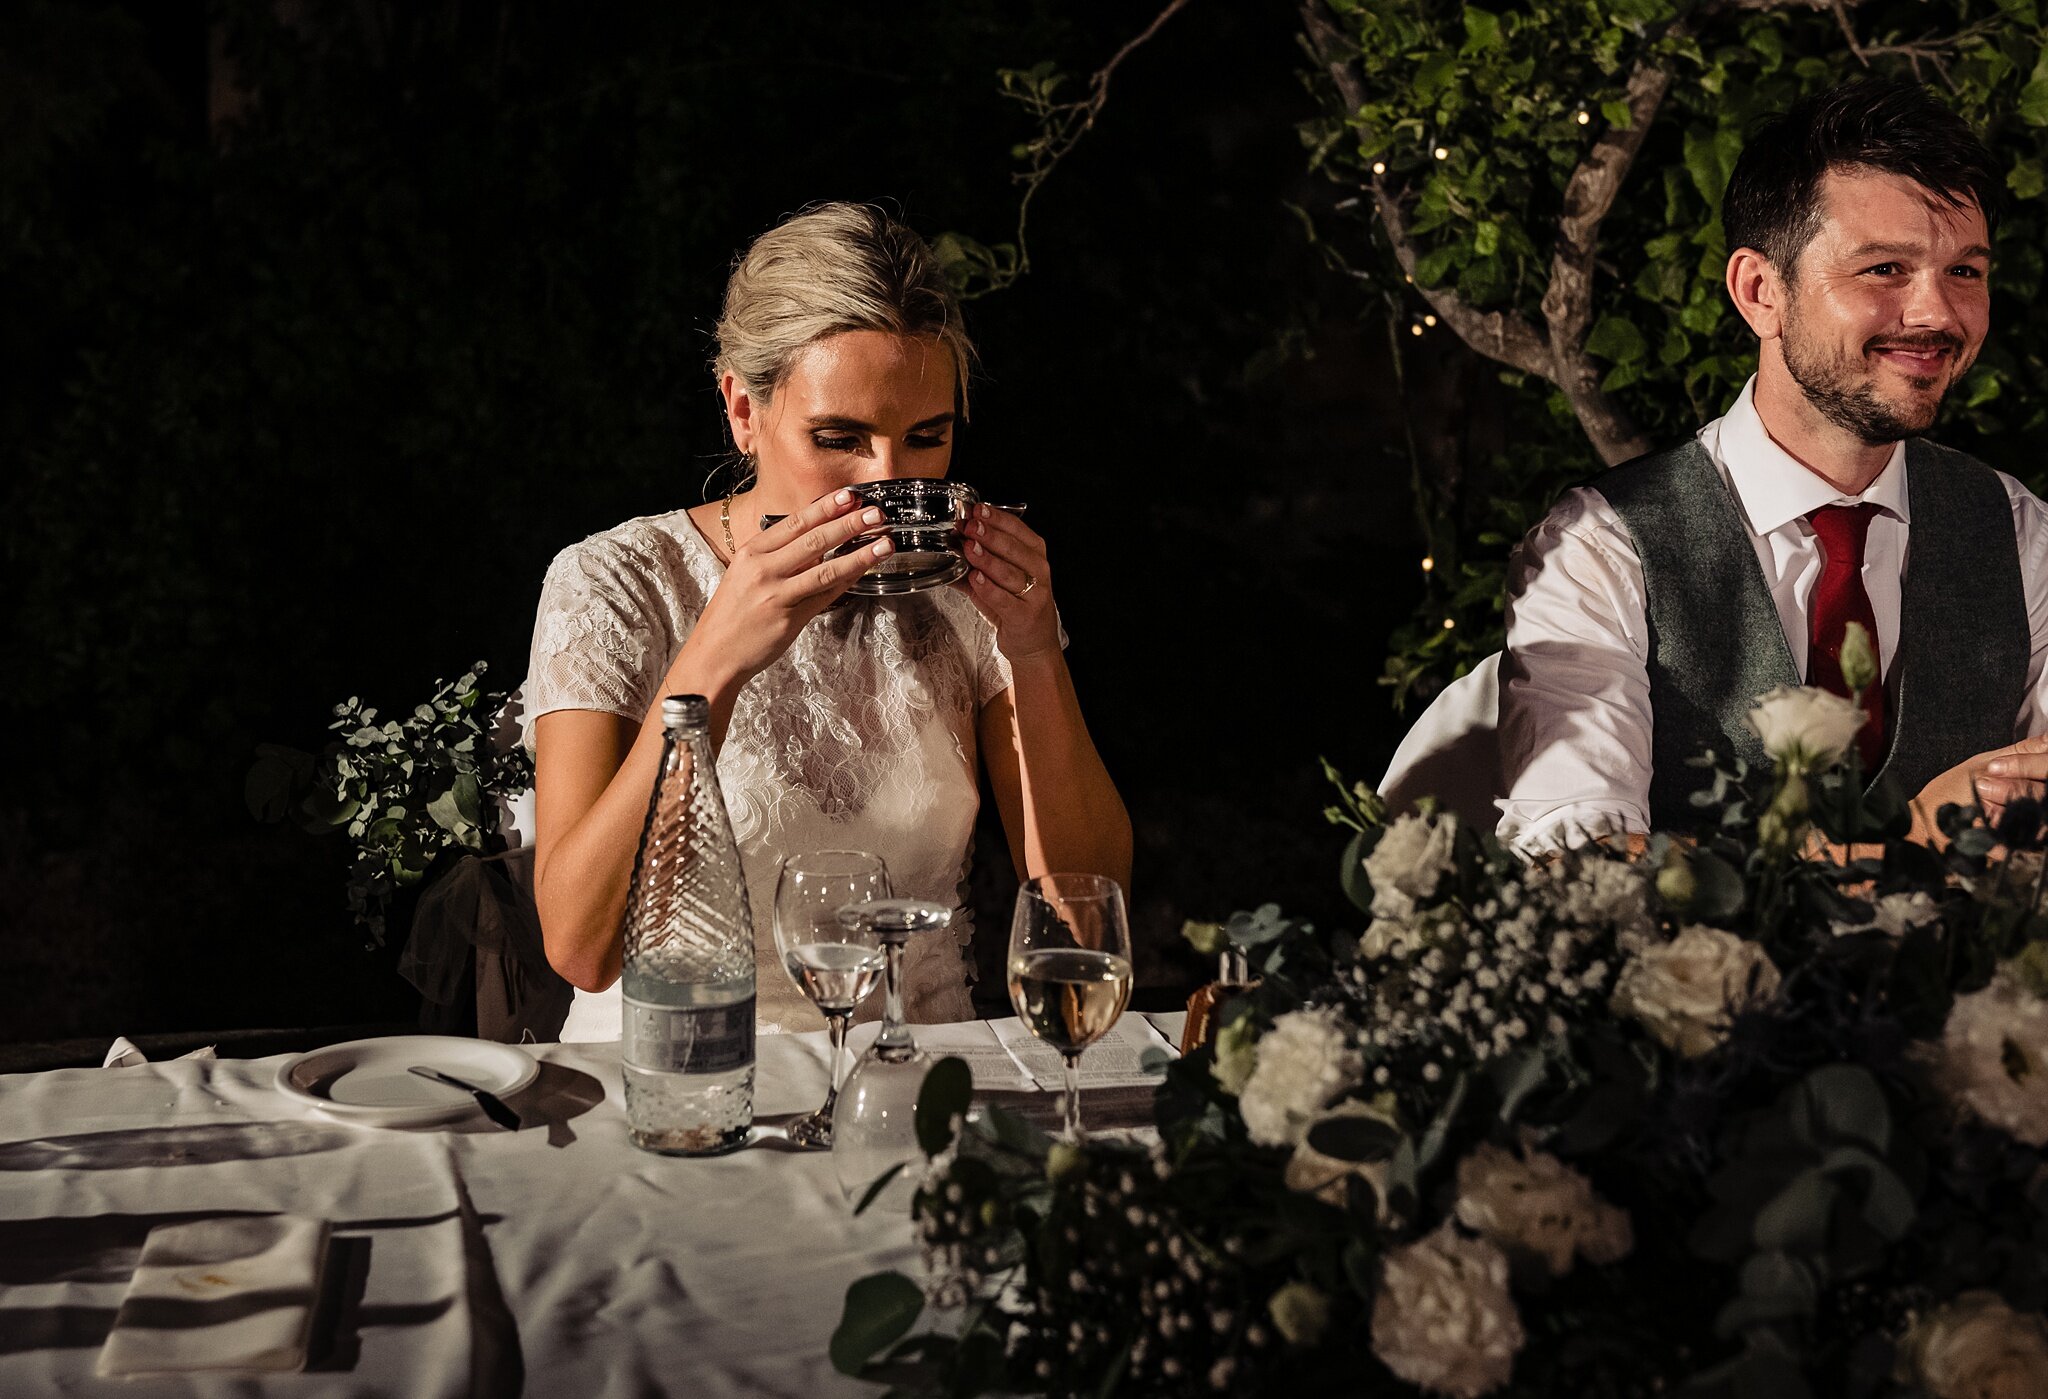 Wedding Reception at the Olive Gardens Mdina - Wedding Photography Malta - Shane P. Watts Photography